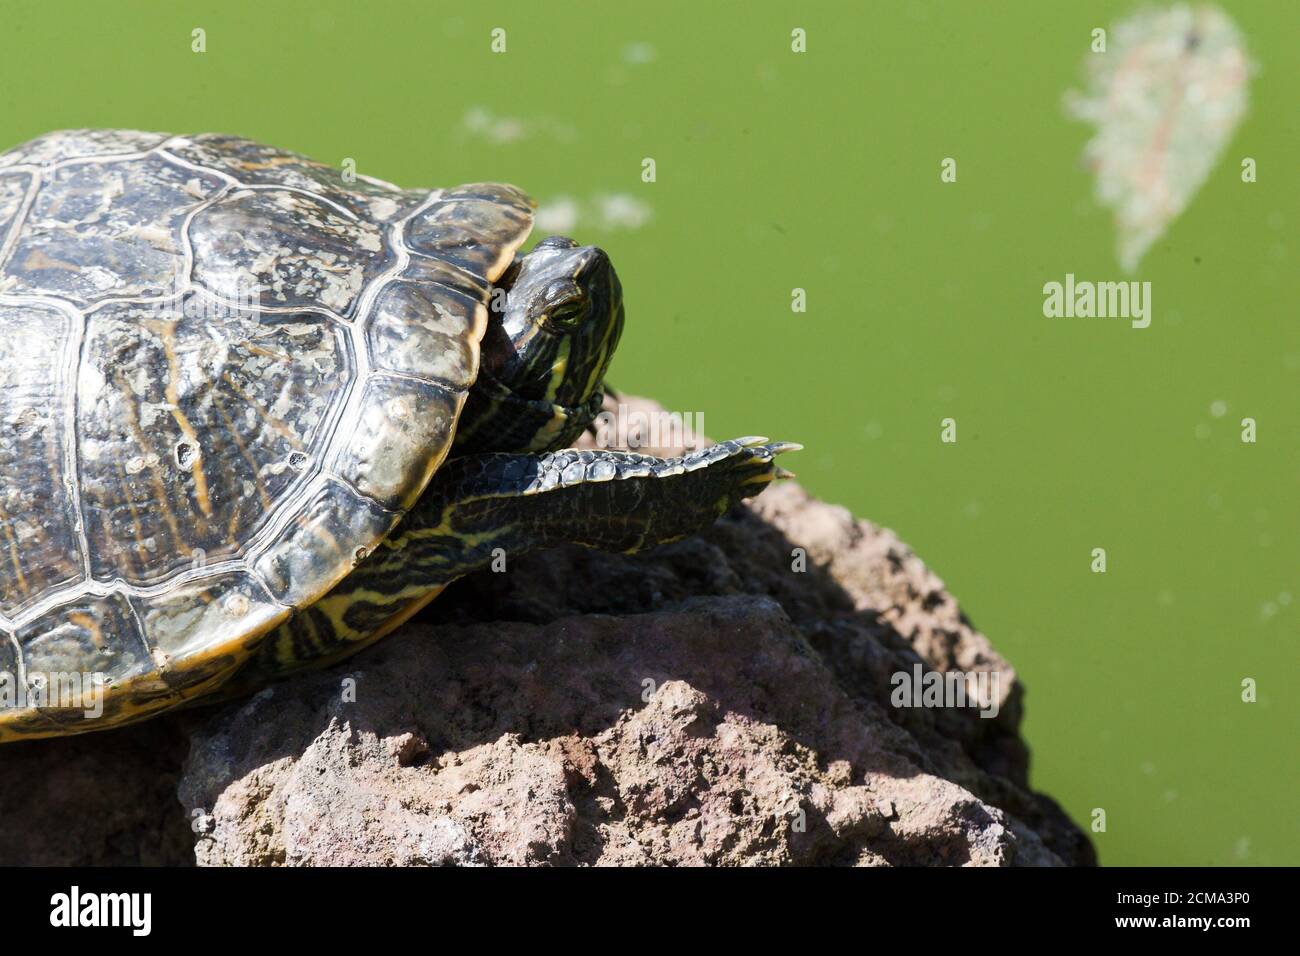 Sunbath turtle Stock Photo